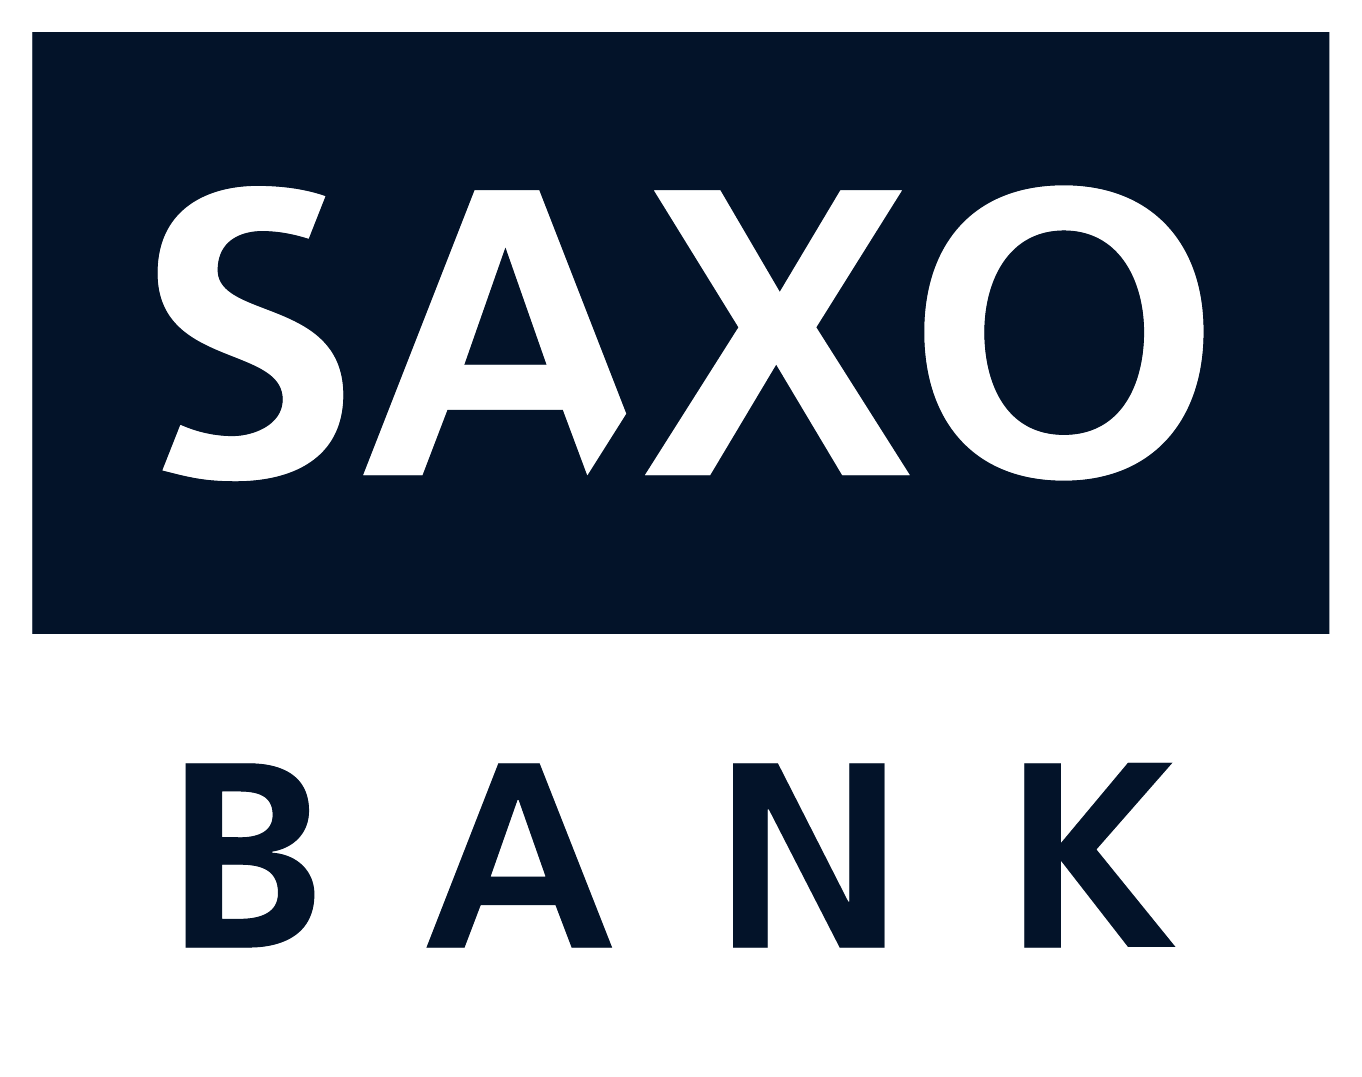 Saxo Bank logo 2020 White RGB